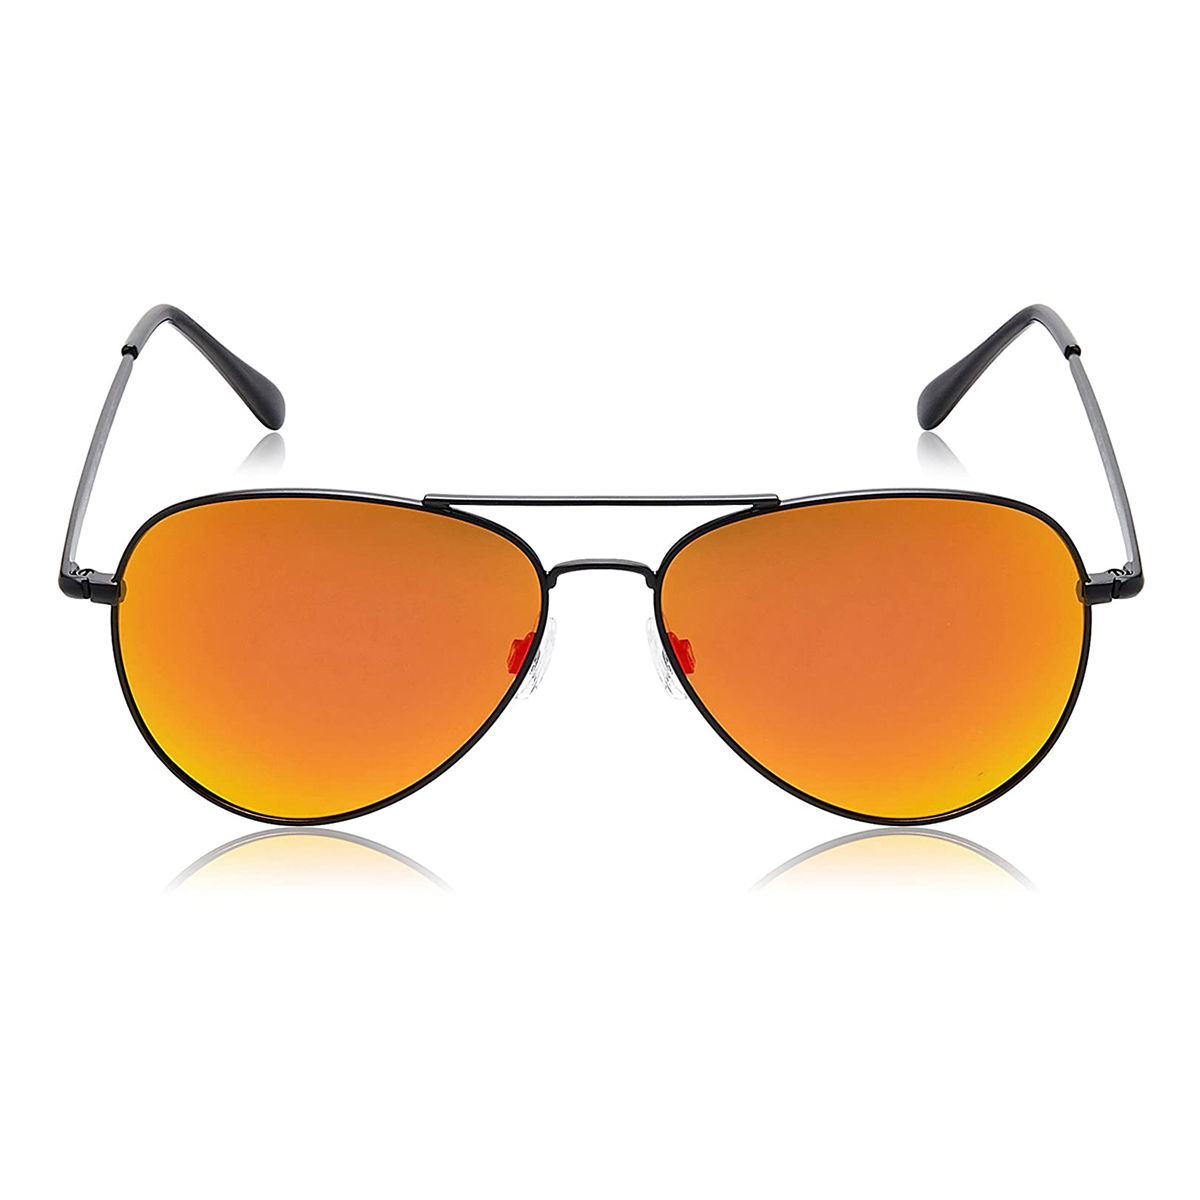 Invu Sunglasses Aviator With Red Lens For Men